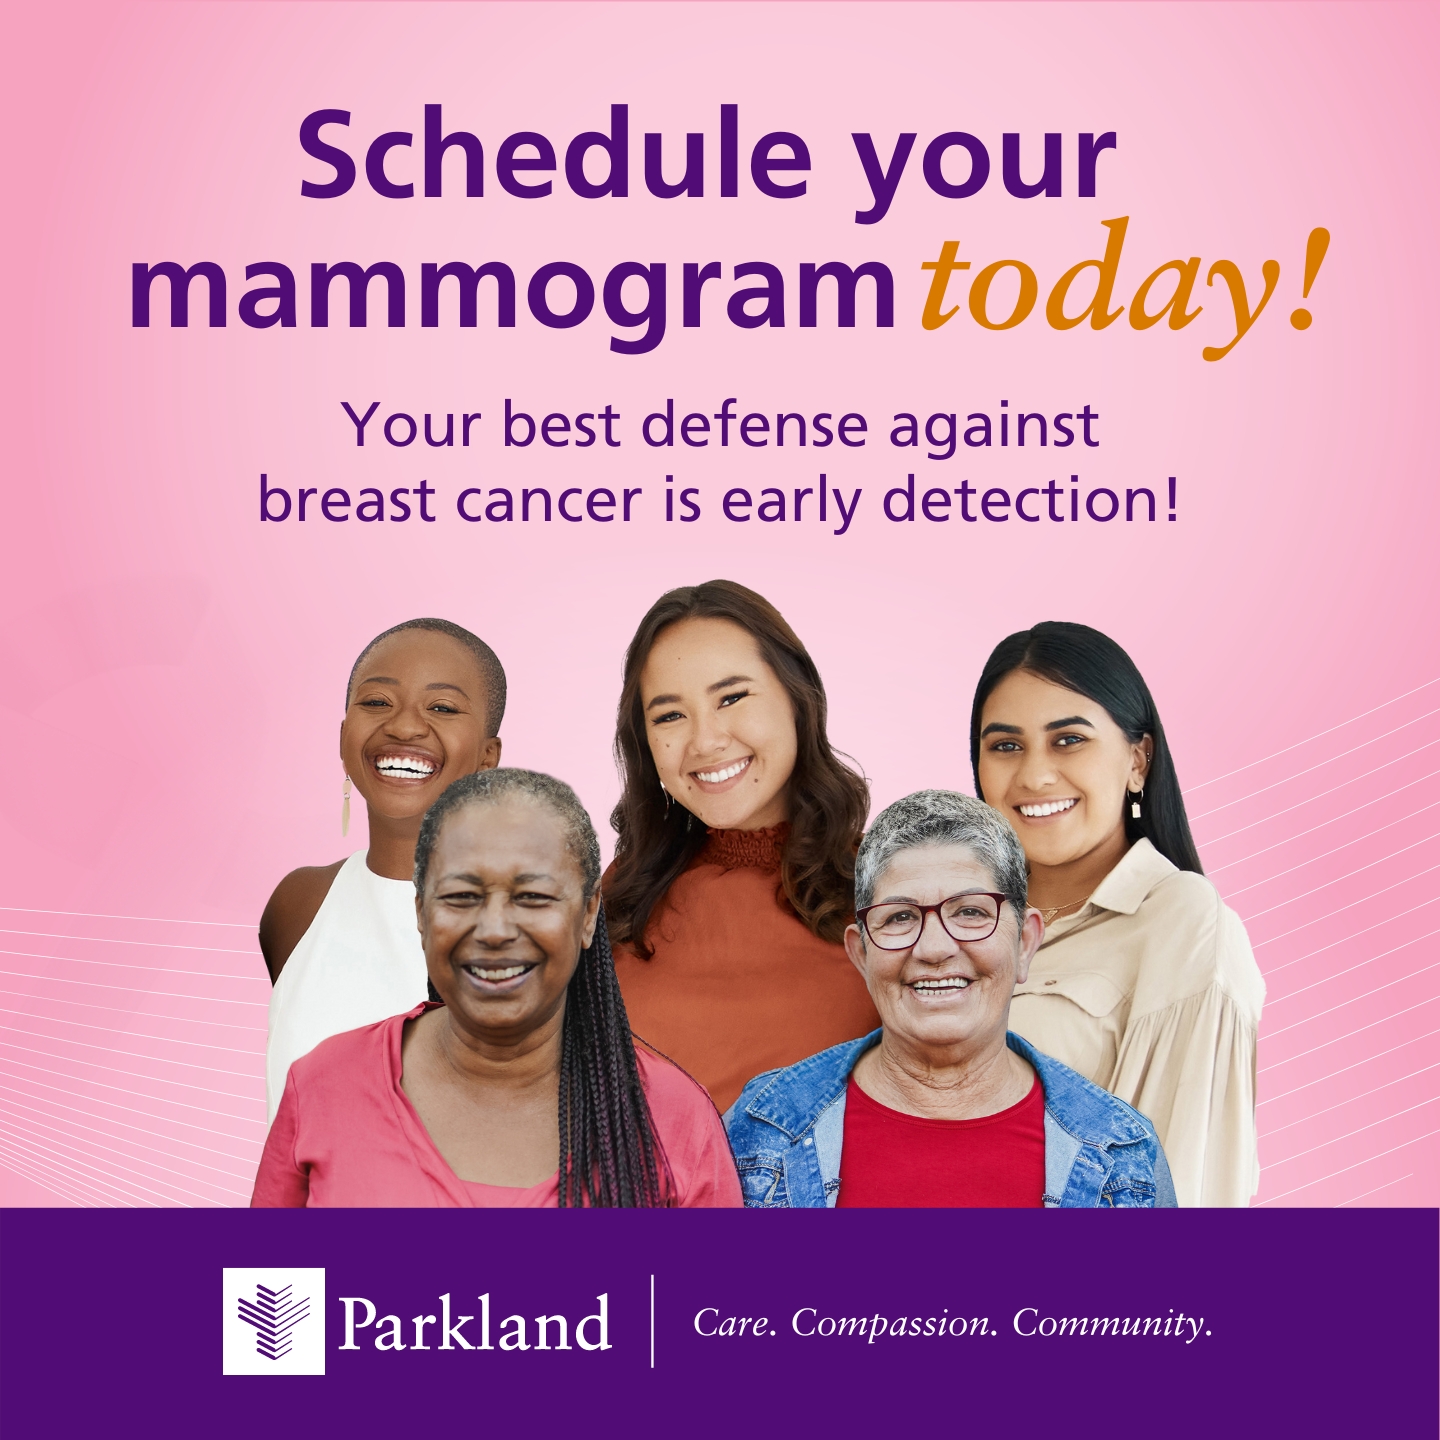 Mammograms Save Lives